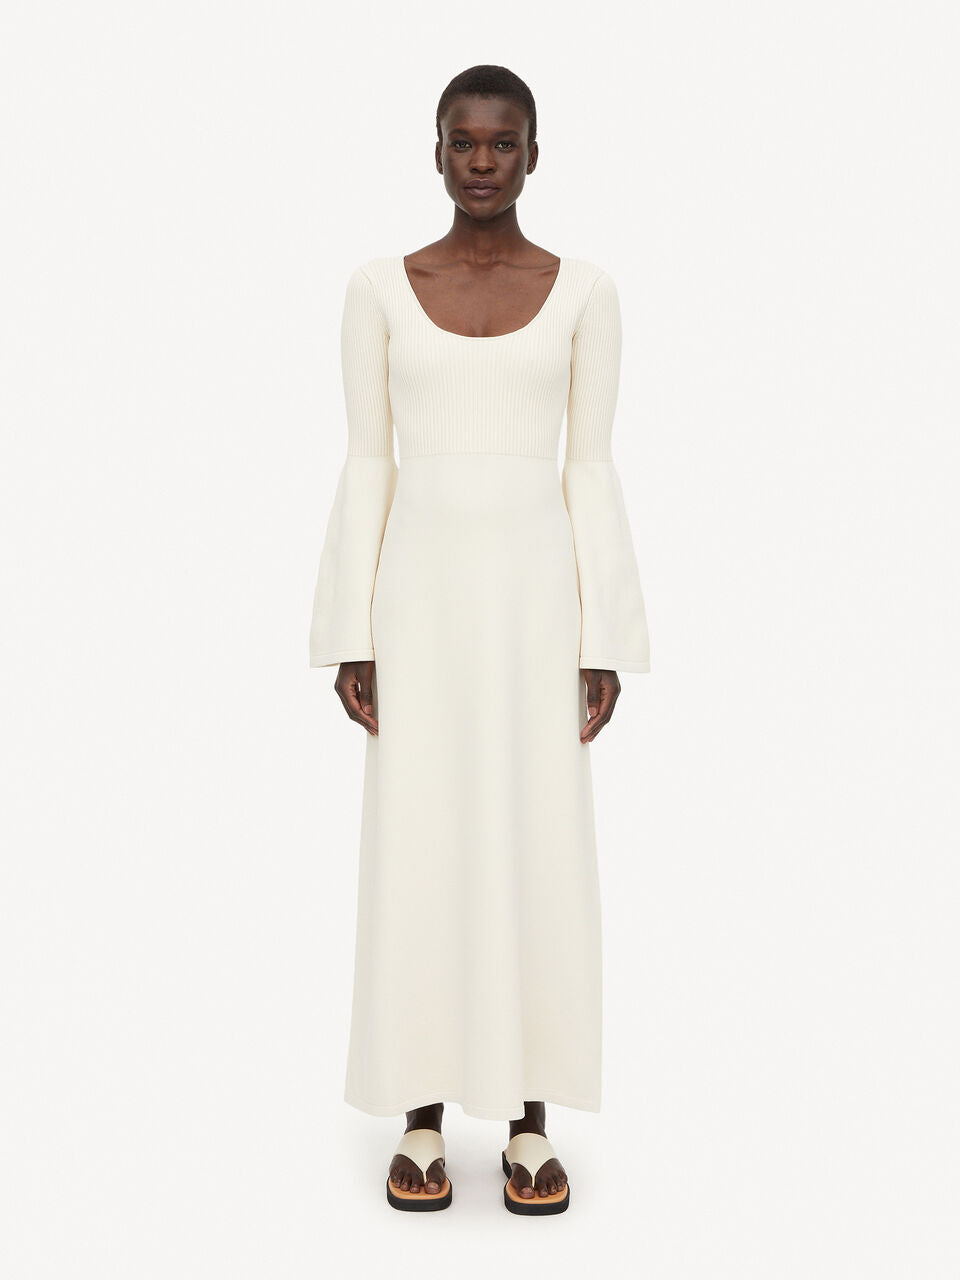 ELYSIA  knitted dress, soft white